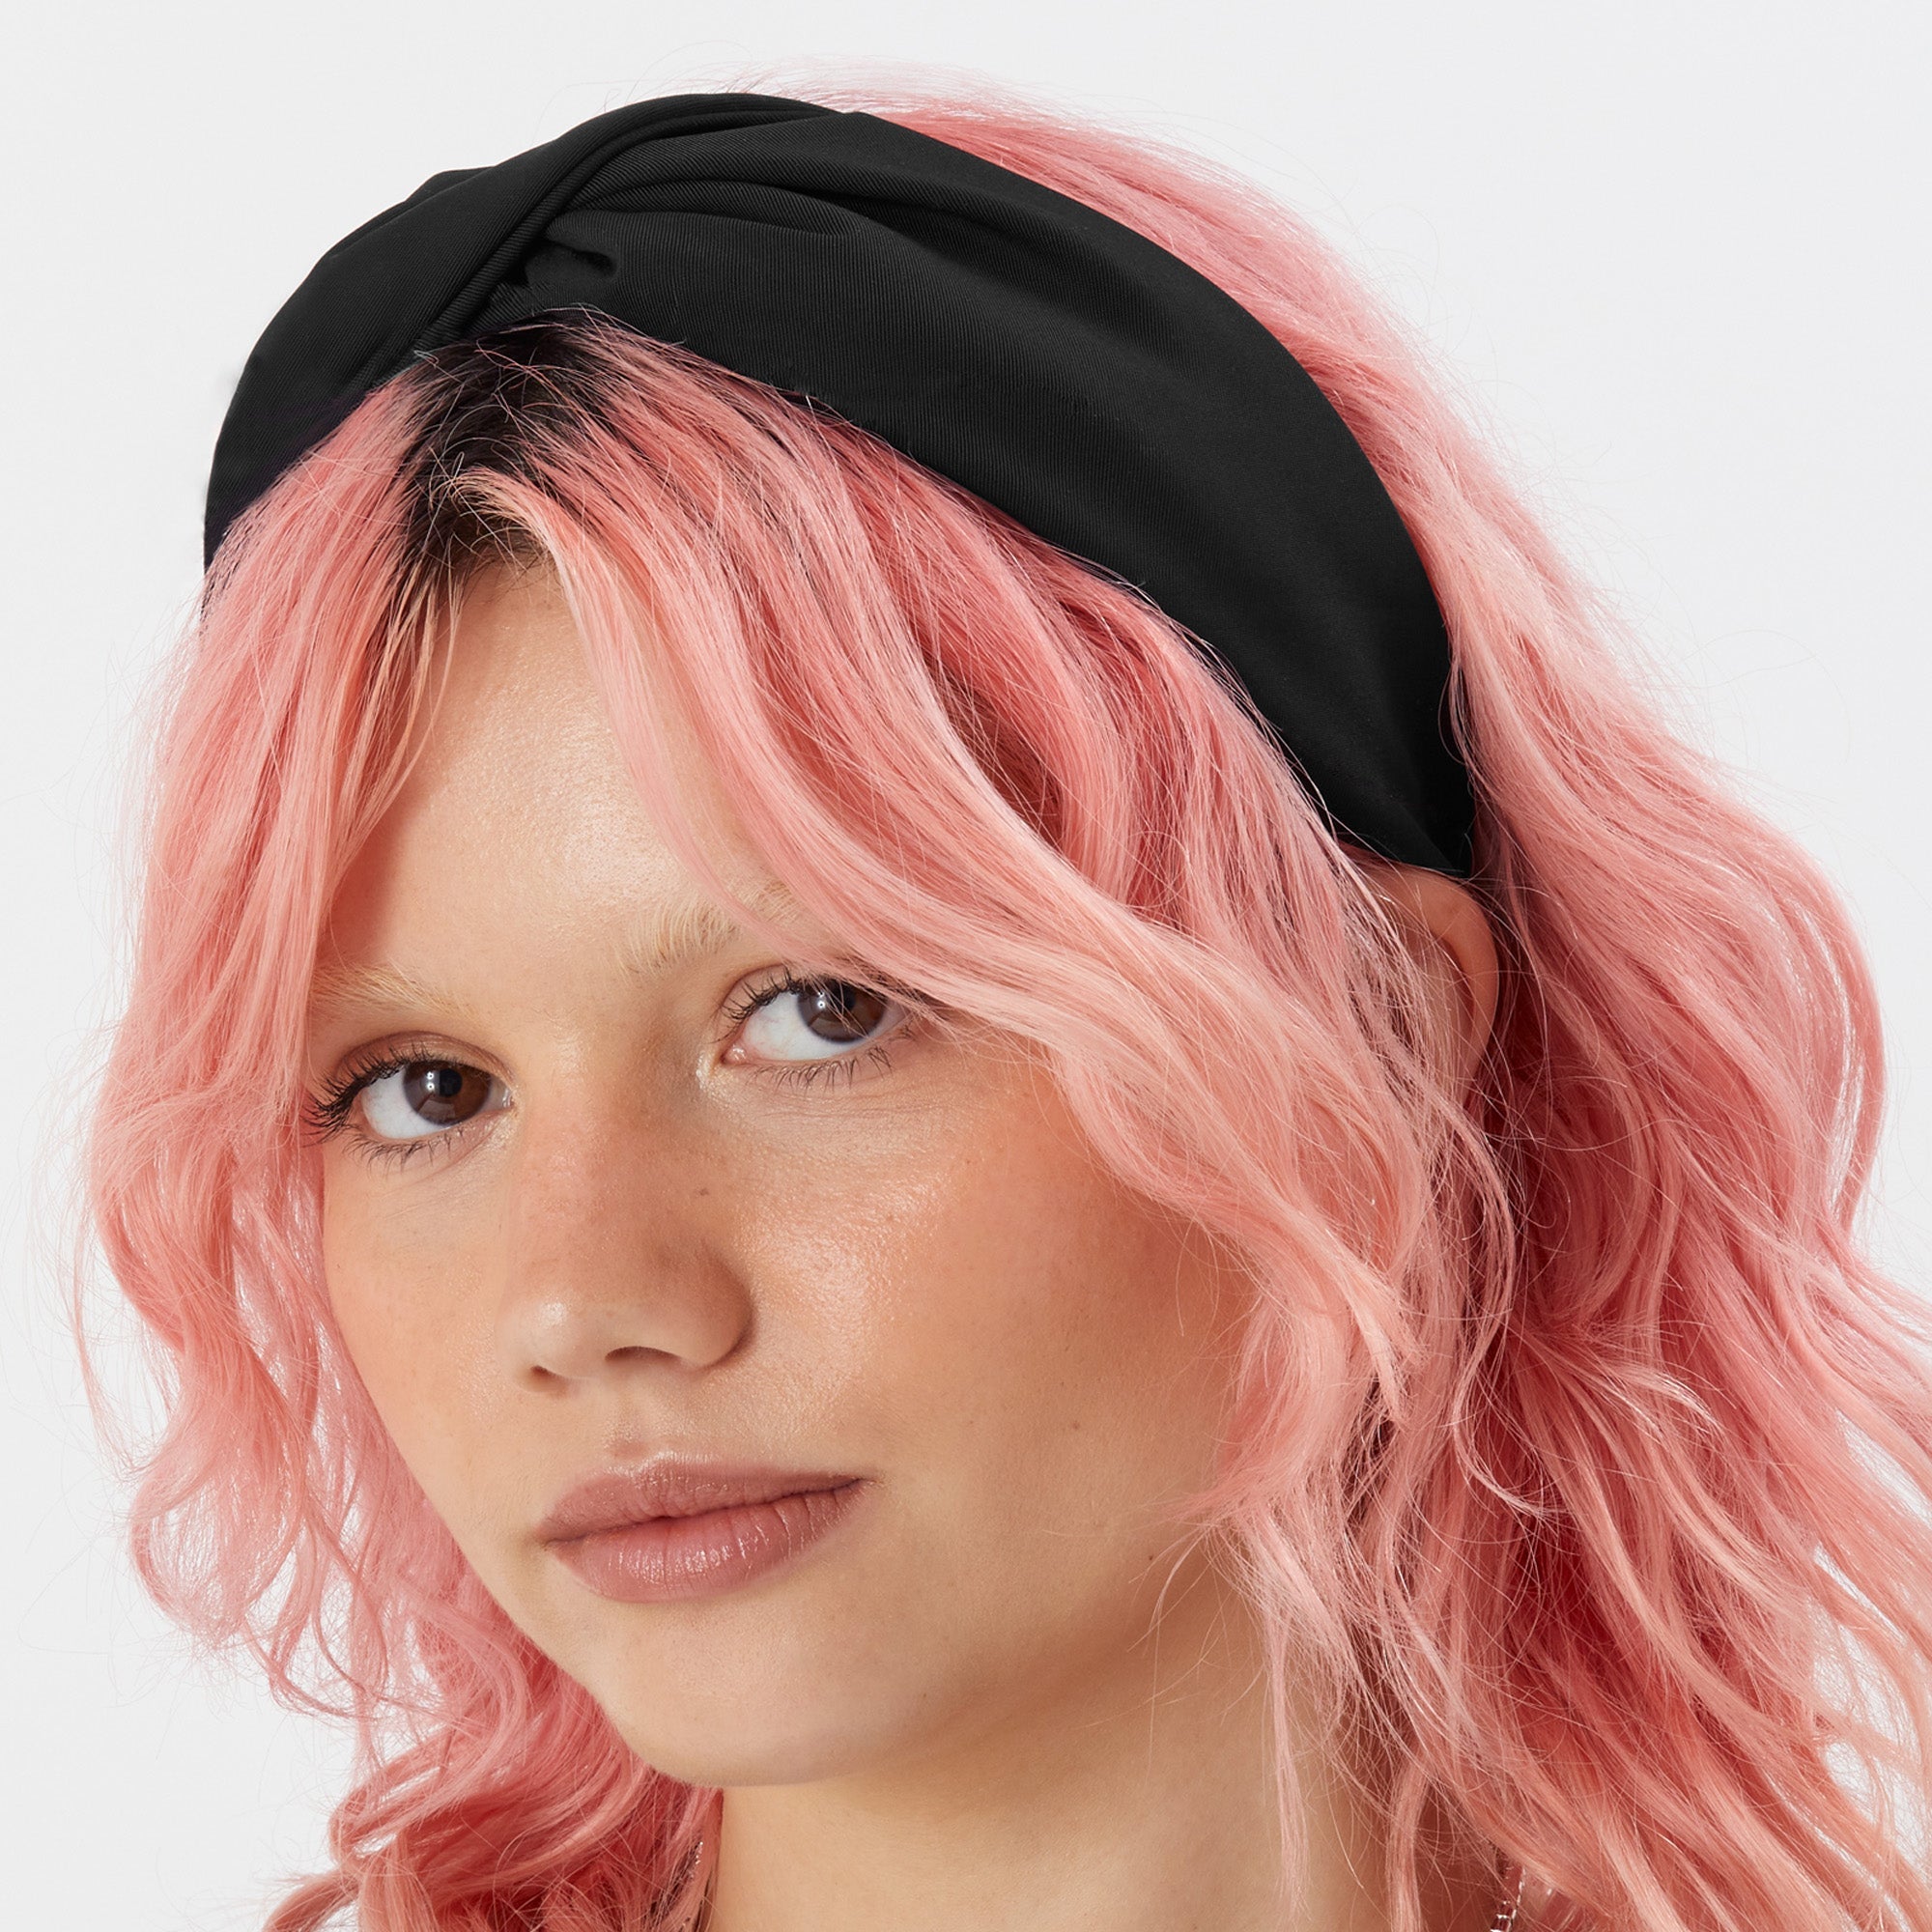 Accessorize London Women's Black Wide Twist Satin Headband